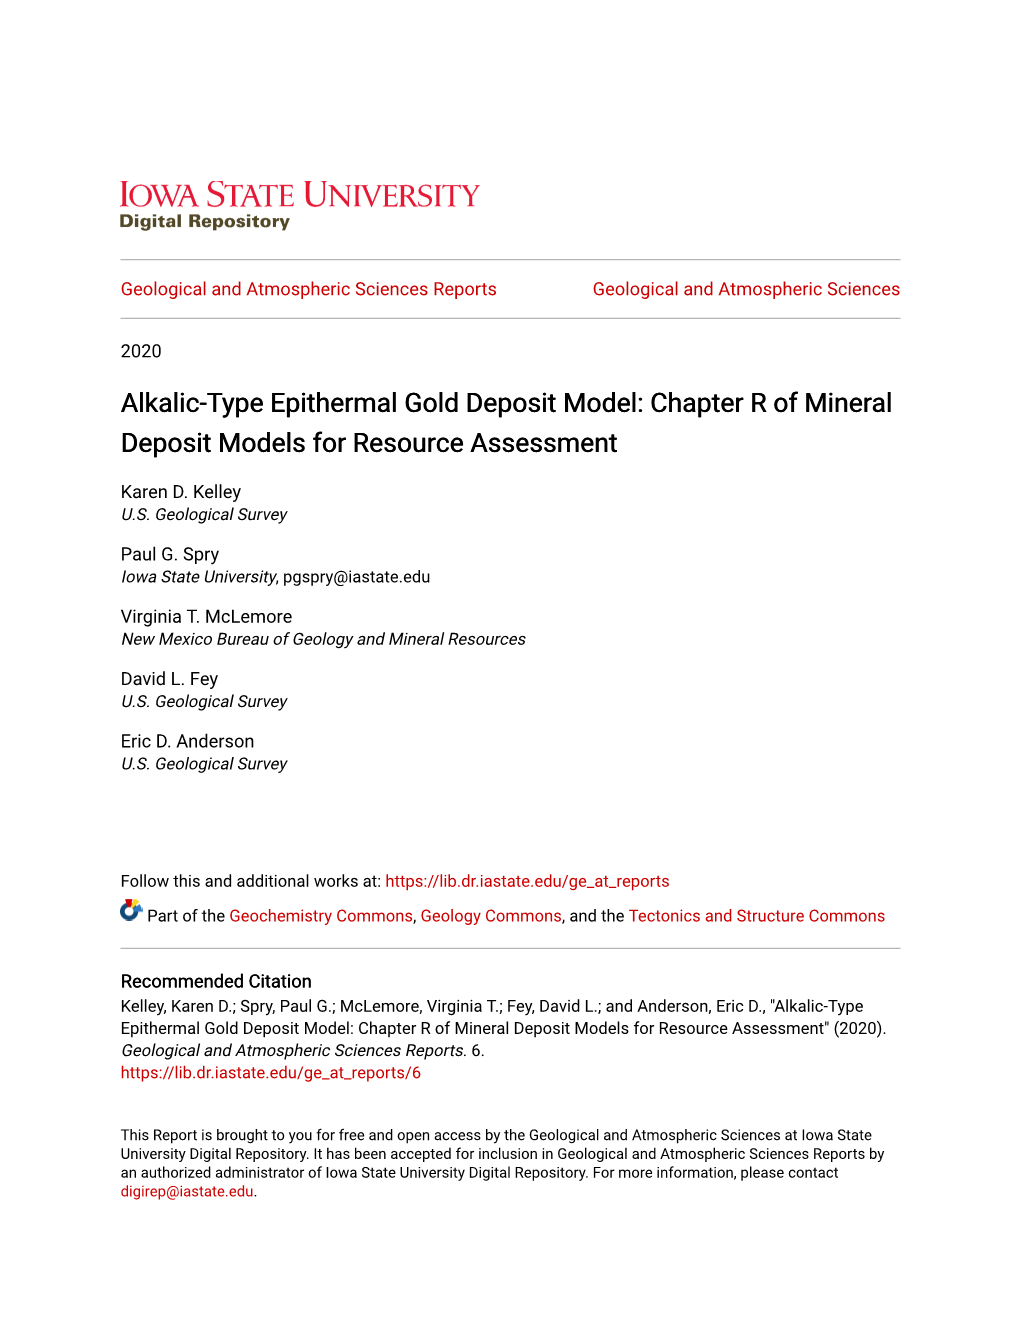 Alkalic-Type Epithermal Gold Deposit Model: Chapter R of Mineral Deposit Models for Resource Assessment